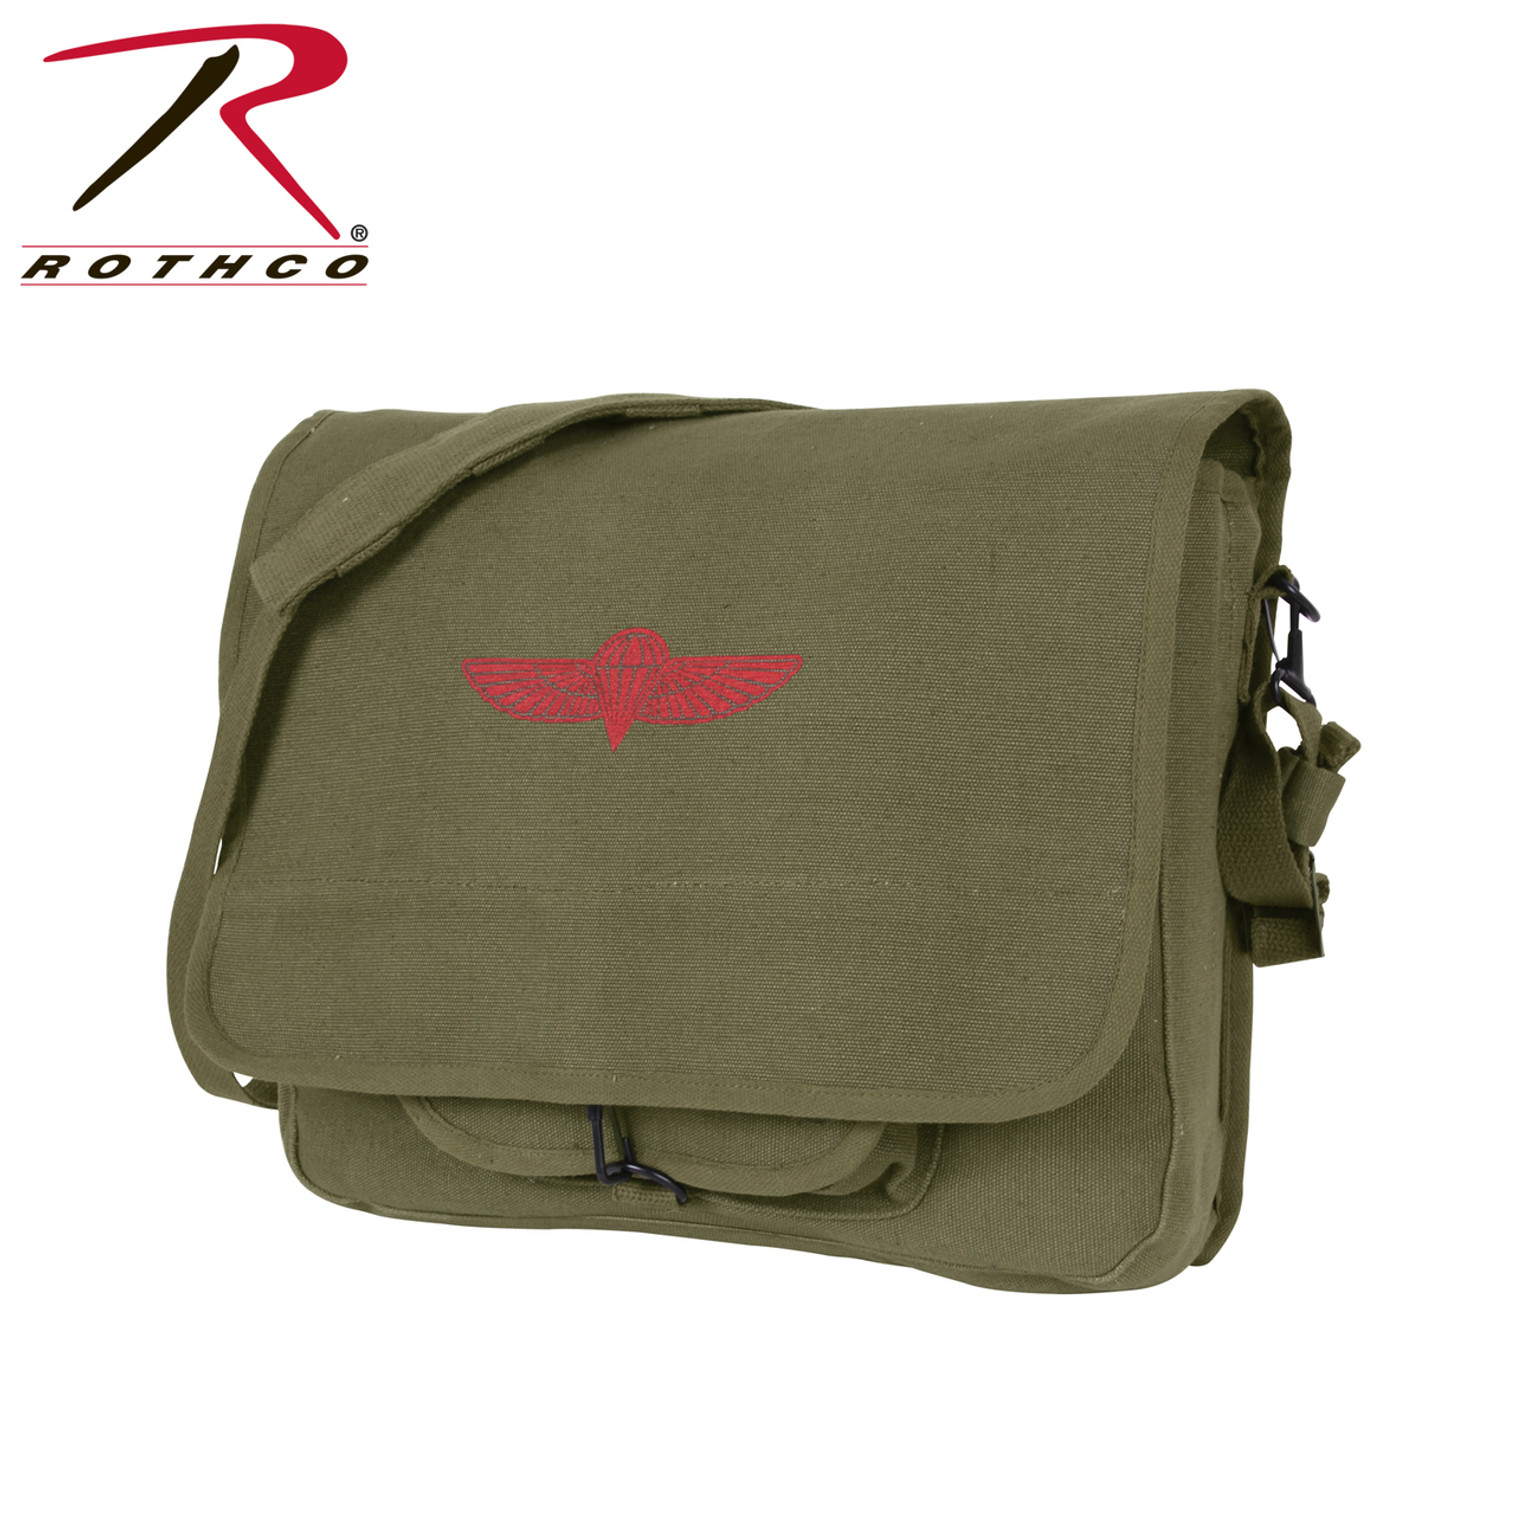 Rothco Canvas Israeli Paratrooper Bag - Olive Drab